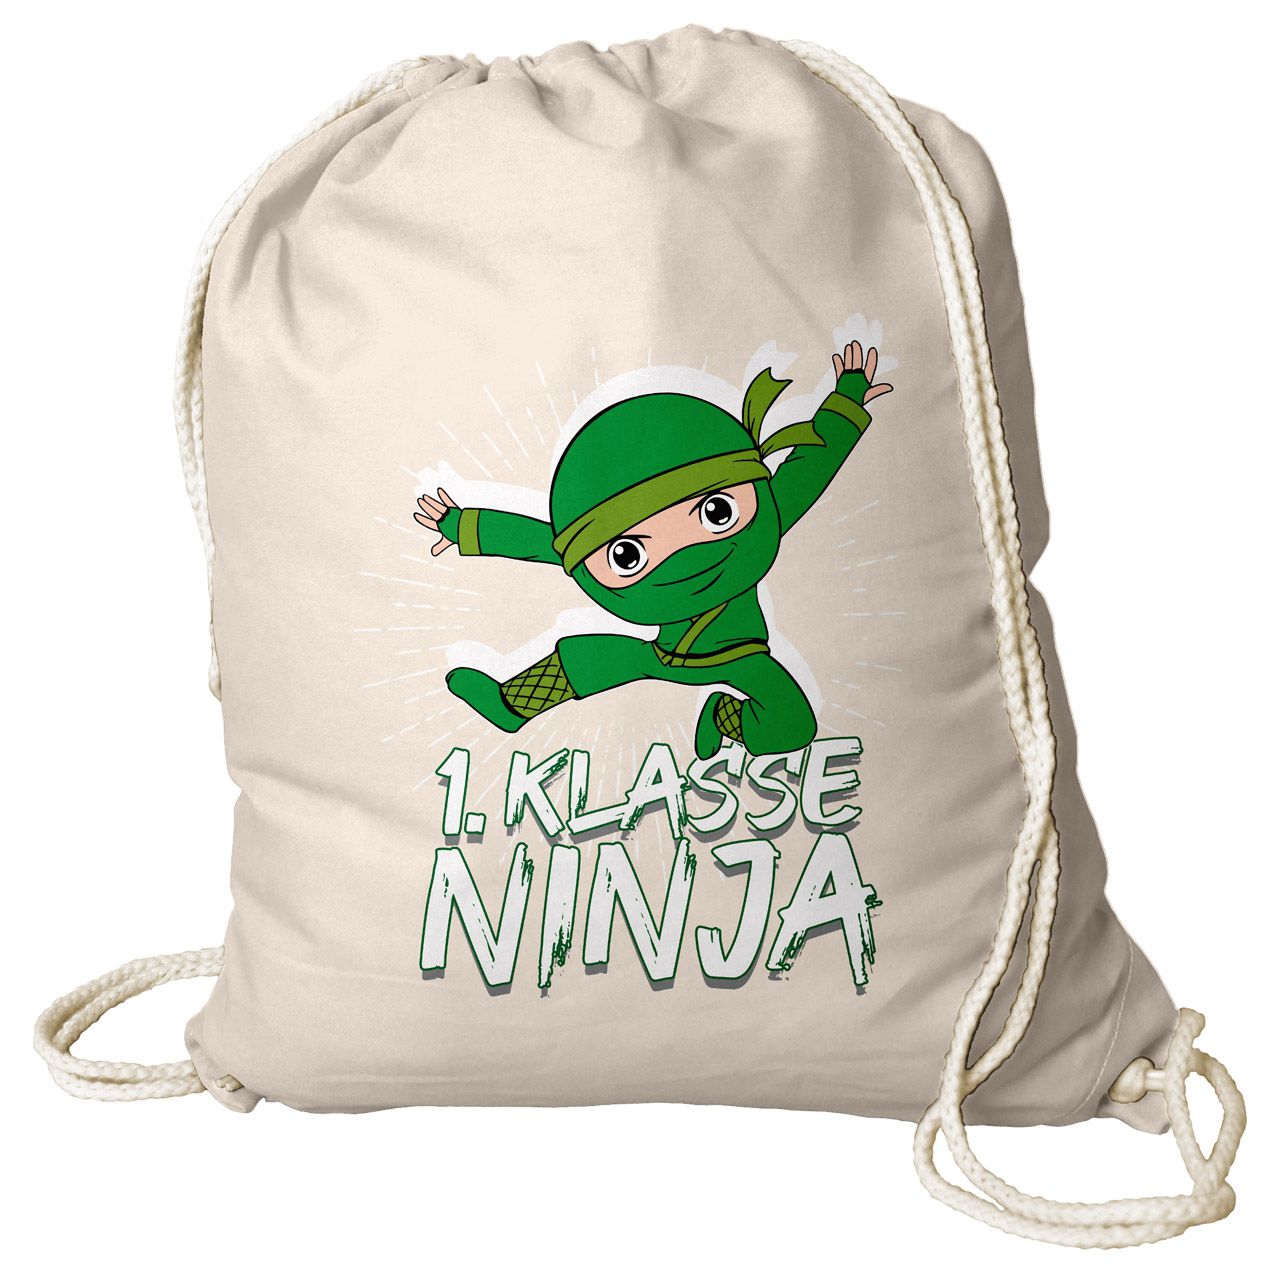 1. Klasse Ninja grün Rucksack Beutel natur